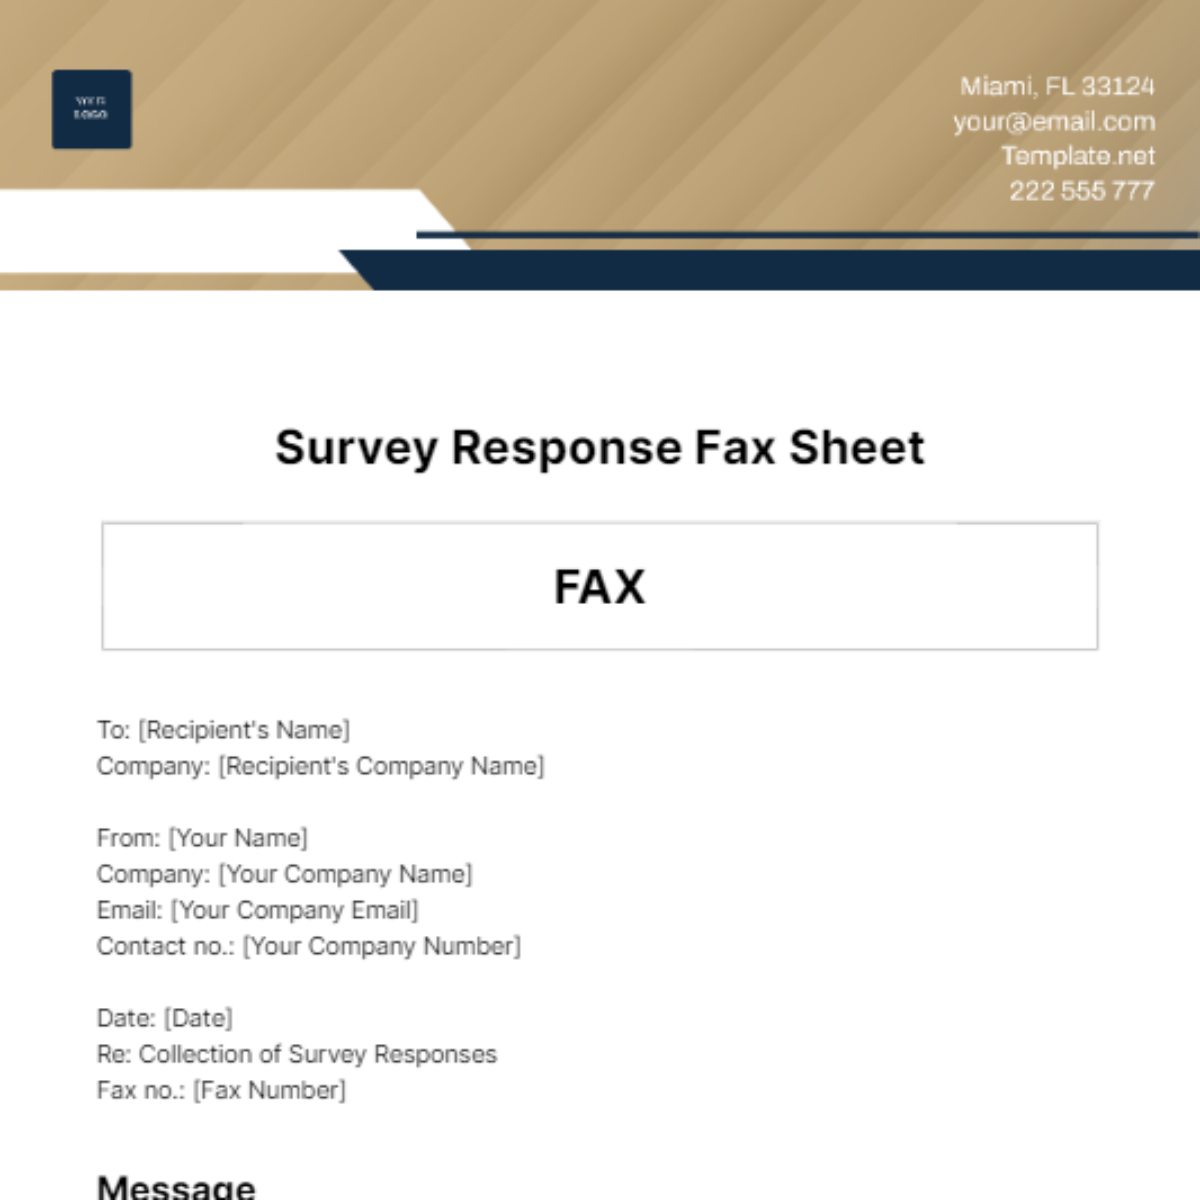 Survey Response Fax Sheet Template